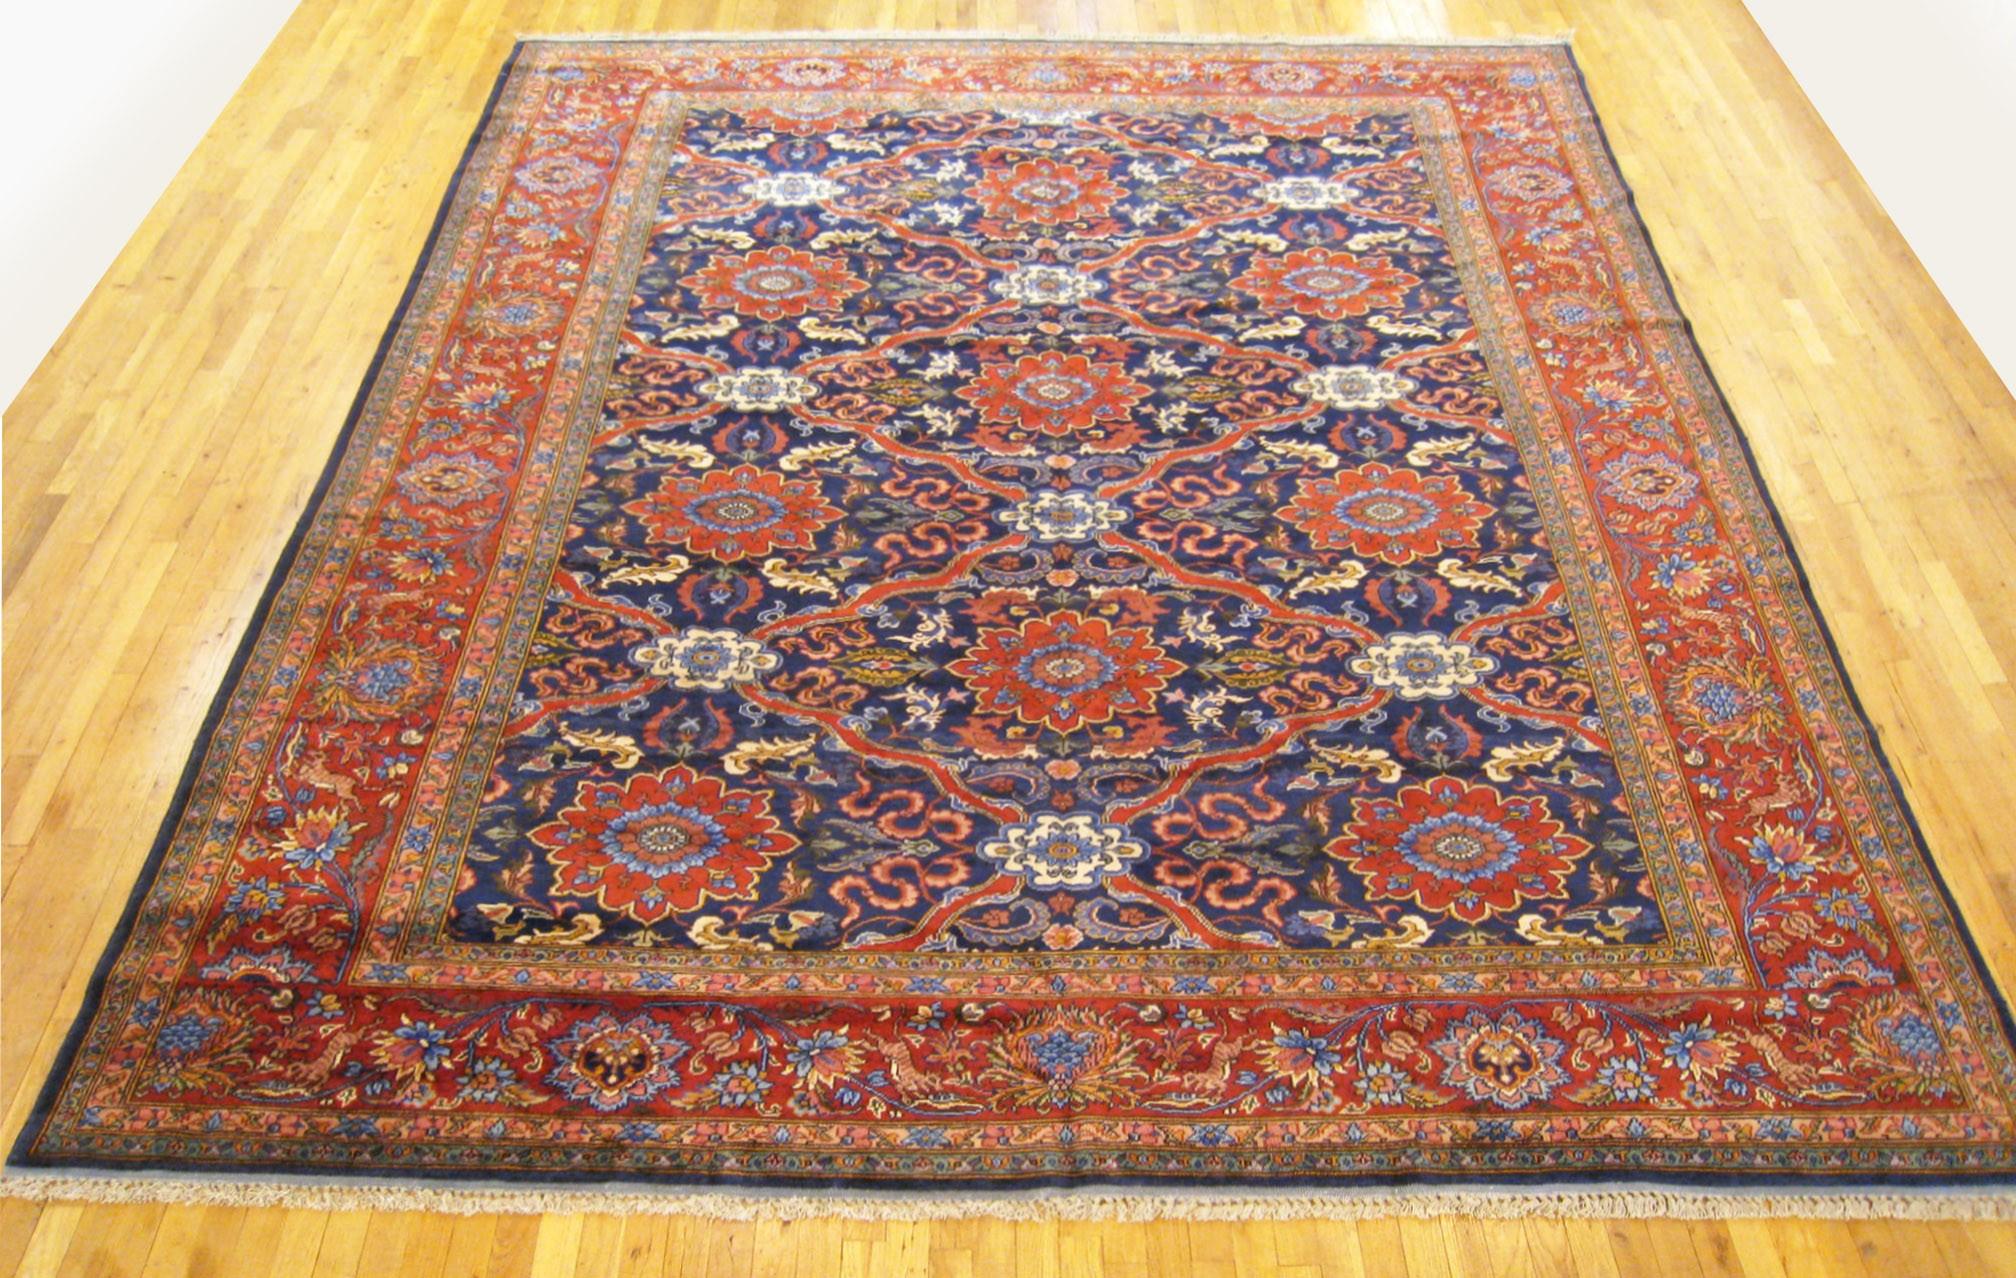 Vintage Indian Tabriz  Oriental Carpet, circa 1930, Room Sized

A vintage Indian Tabriz oriental carpet, circa 1930. Size: 12'8